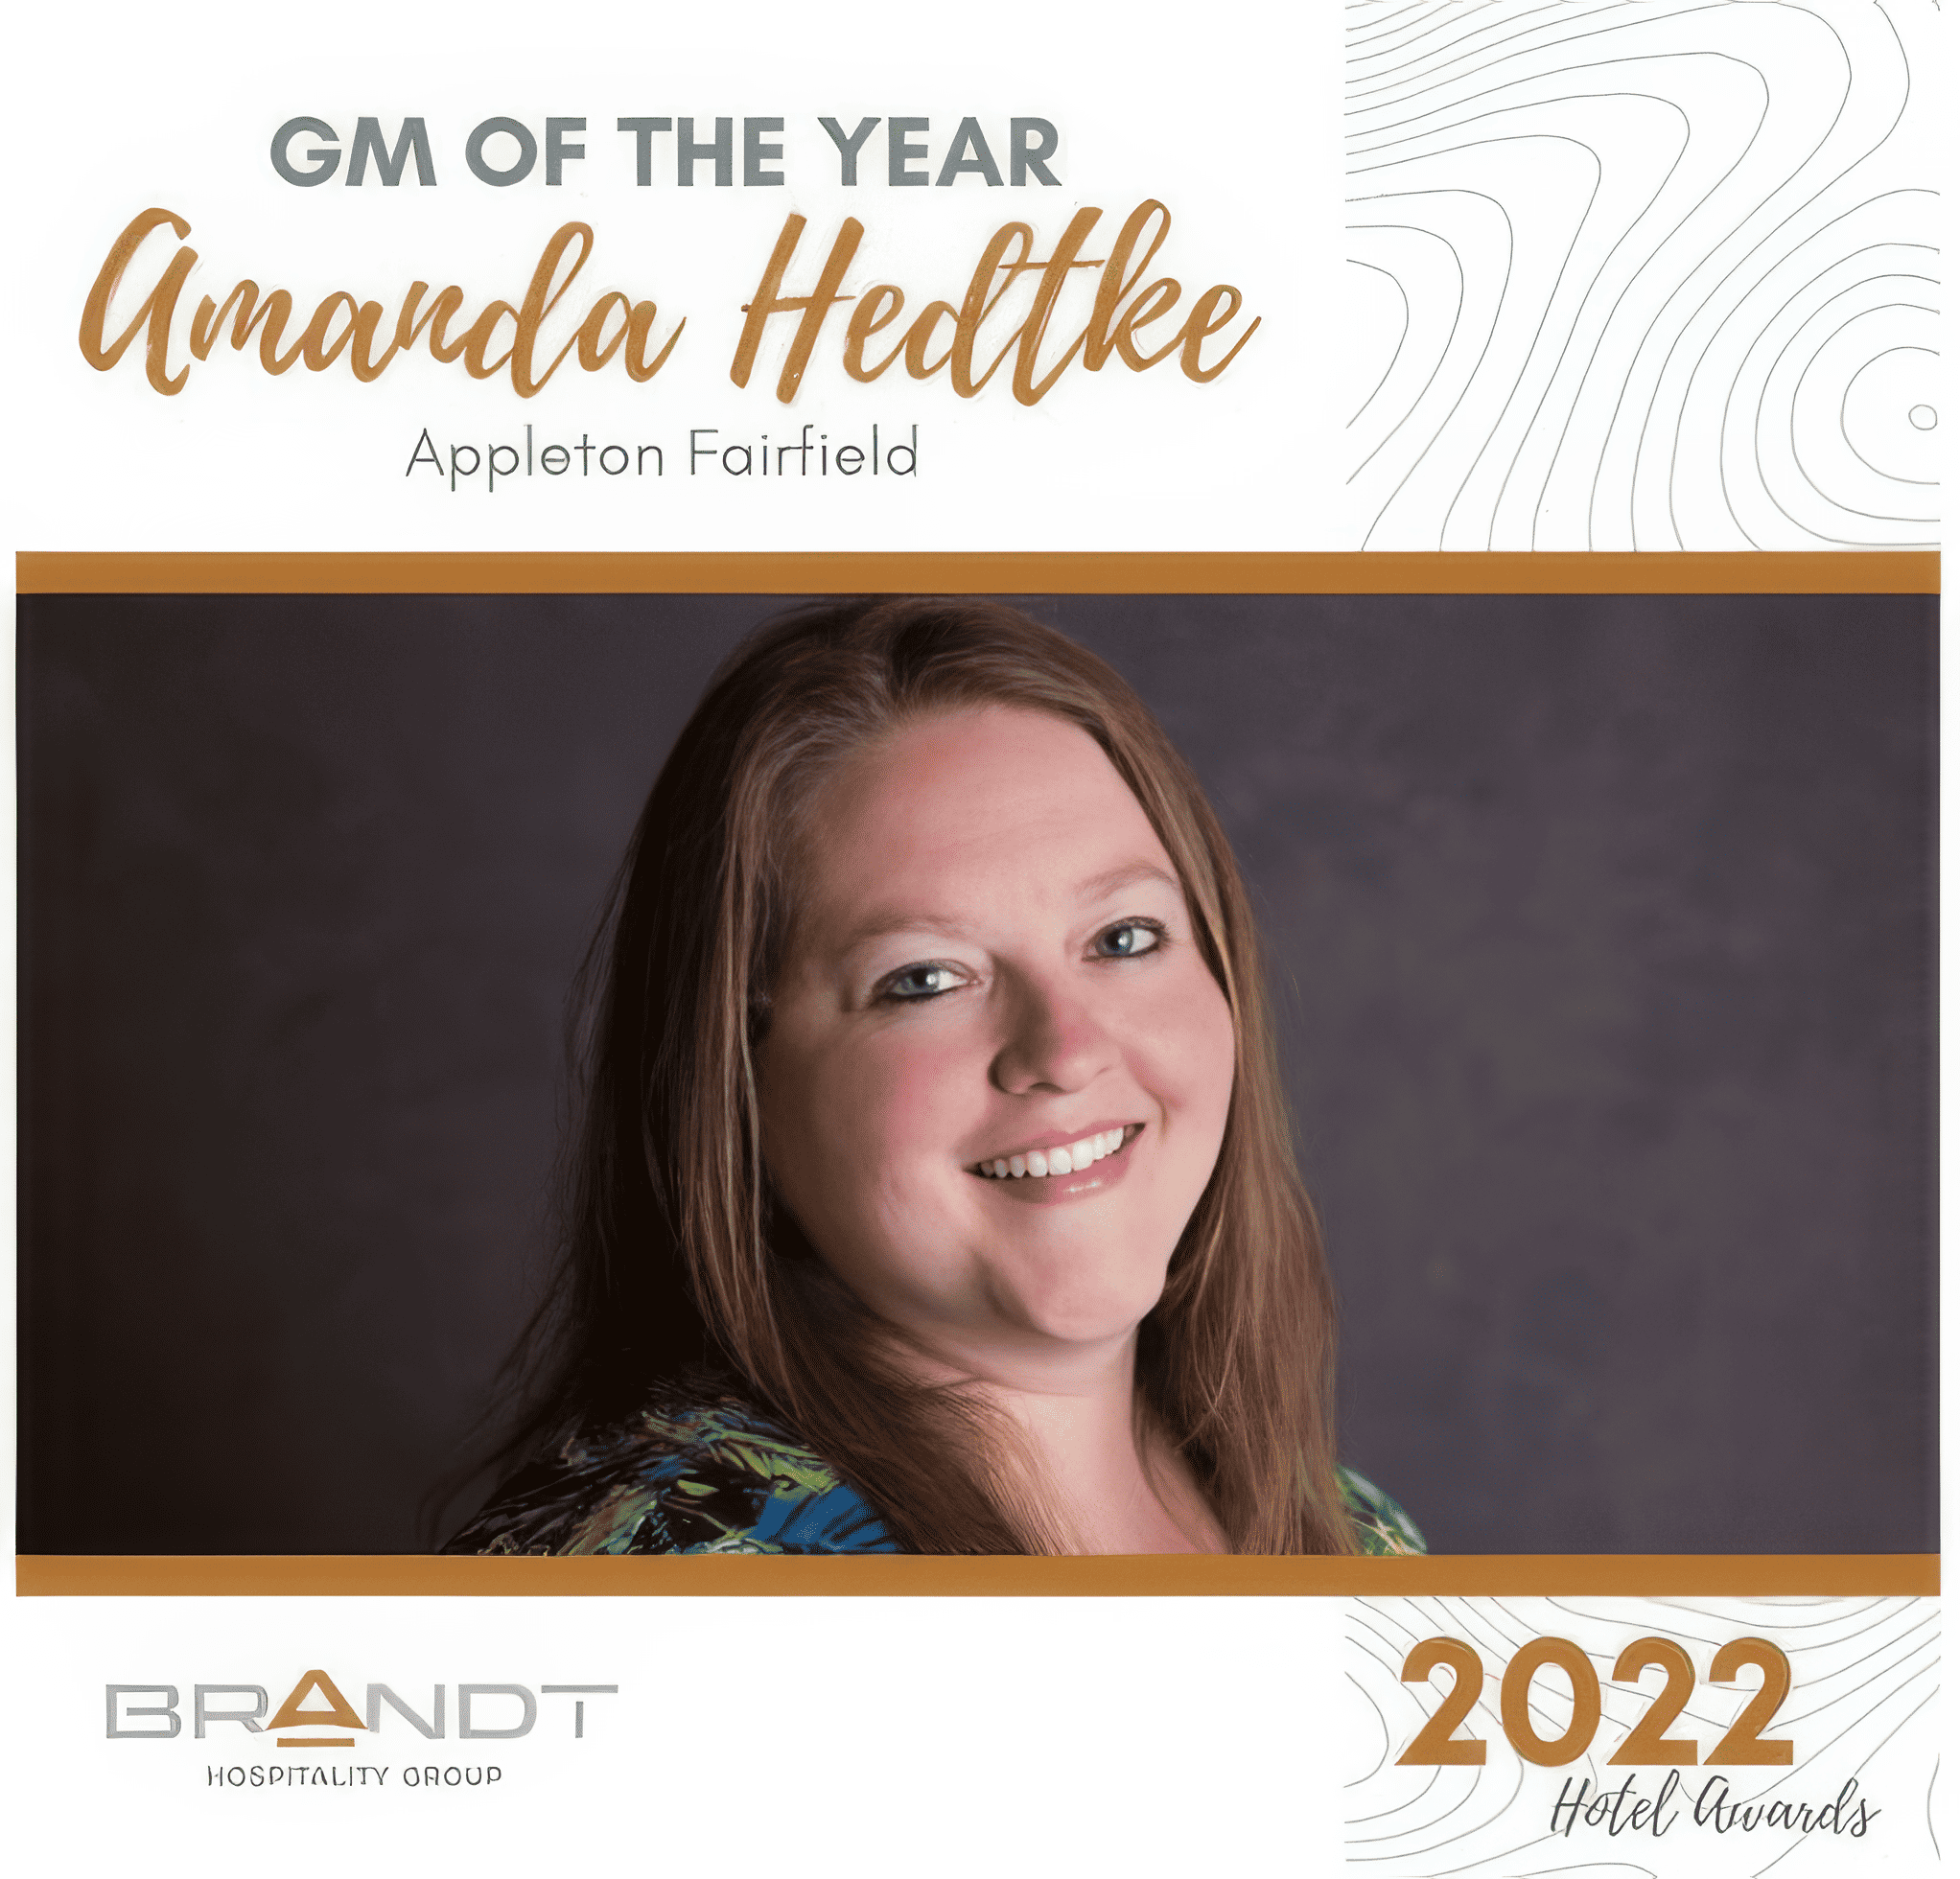 Amanda Hedtke 2022 General Manager of the Year